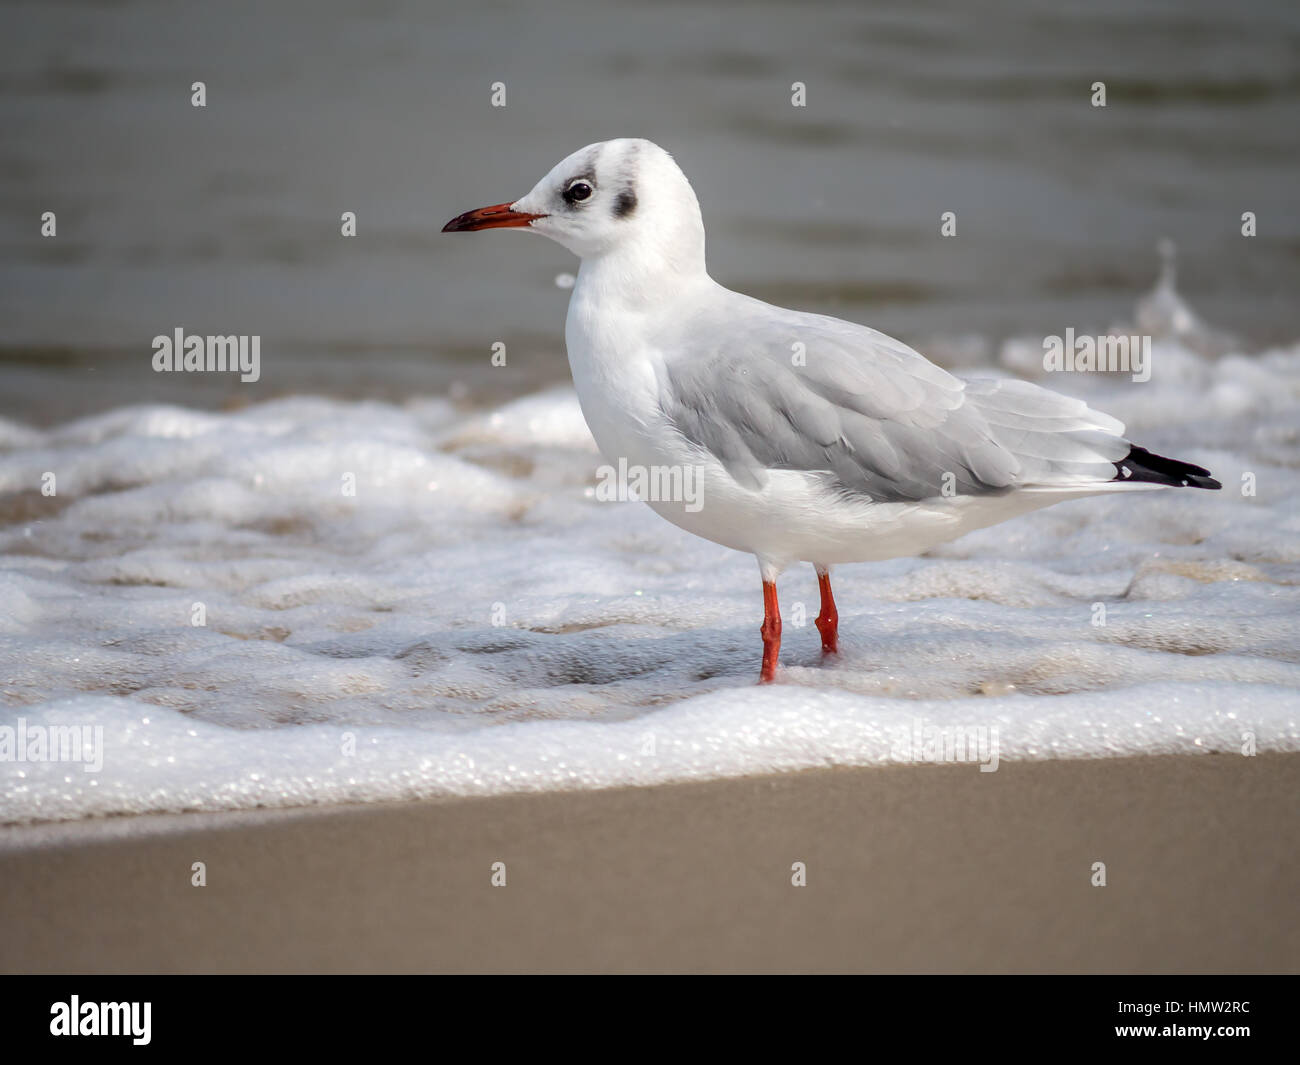 European herring gull on the beach sand against the sea Stock Photo